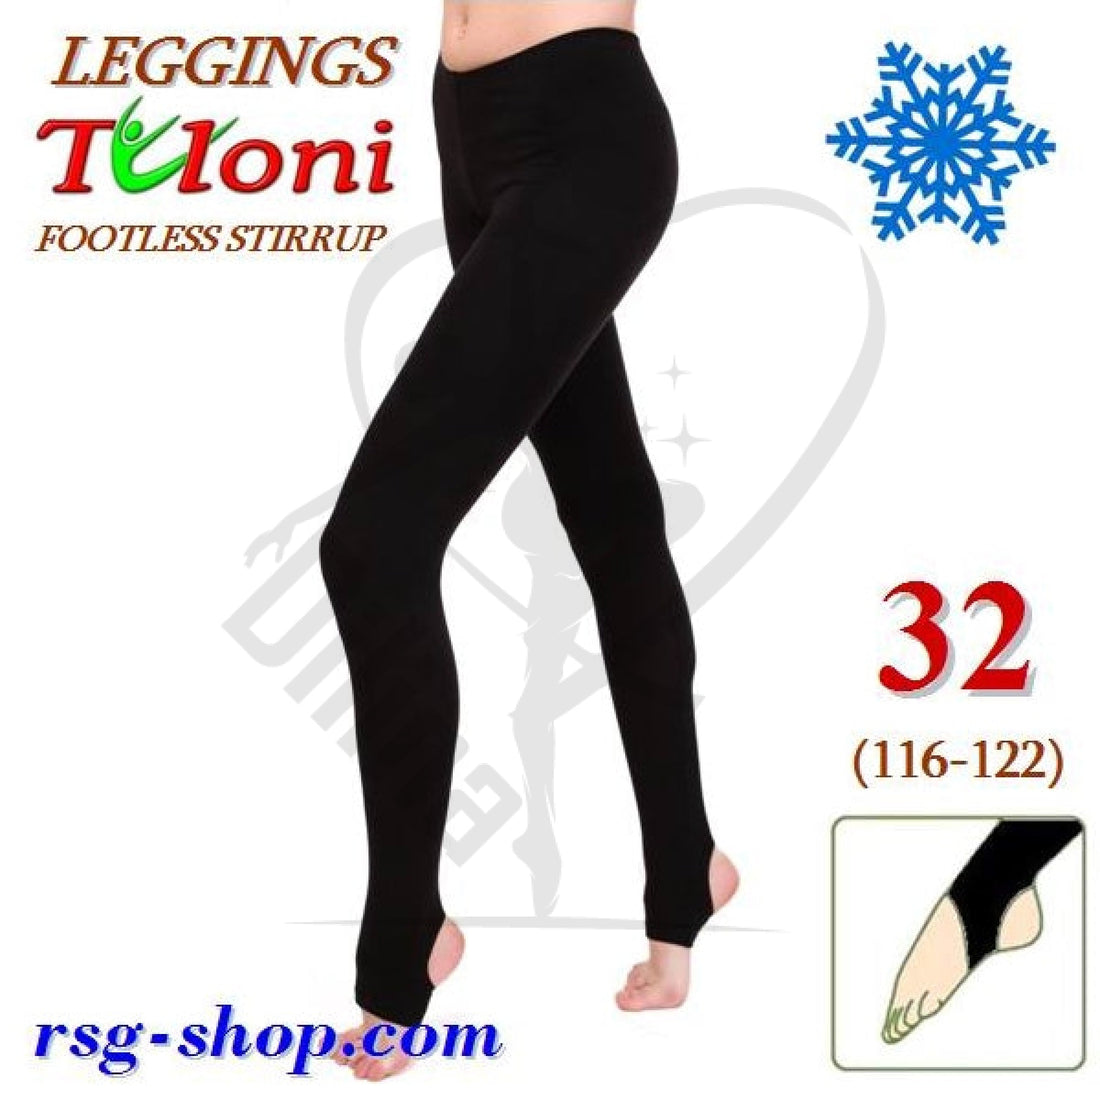 Tuloni Stirrup Winter Leggings 32 (116-122)